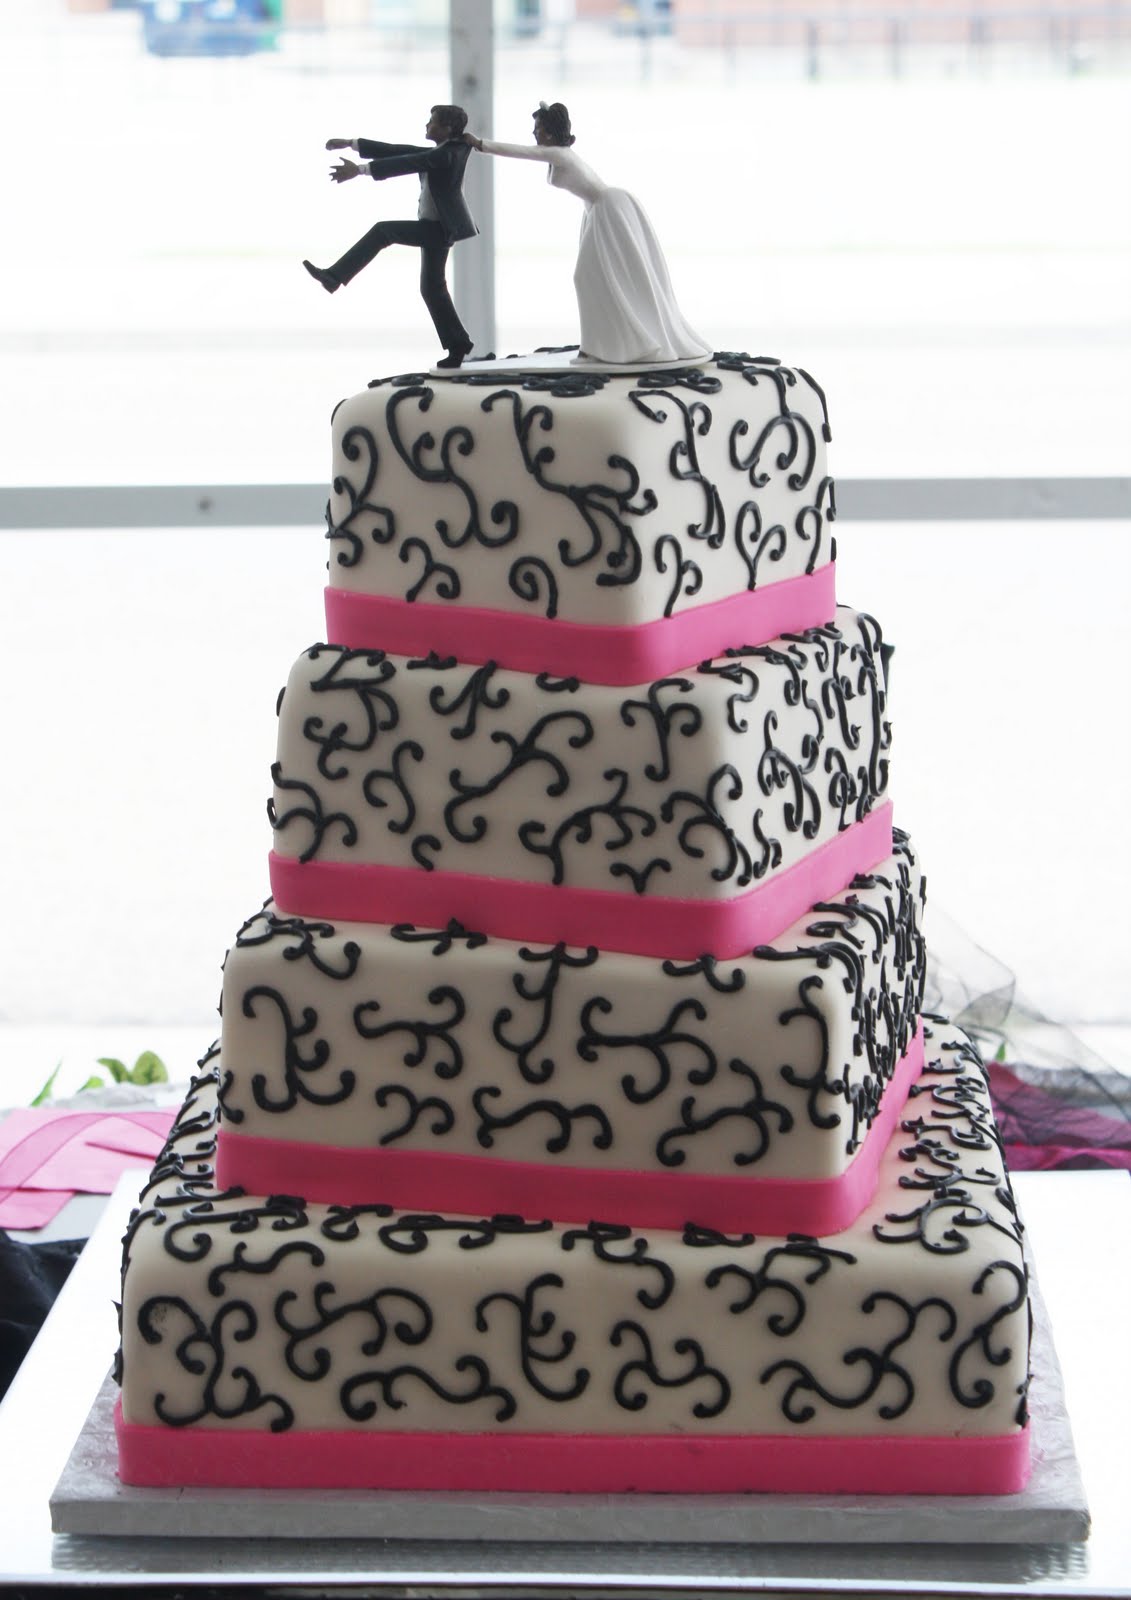 http://3.bp.blogspot.com/-KSBiCpRZr20/TiRoM_LvTpI/AAAAAAAAHpA/2Cb5ADLEVU8/s1600/4+Tiered+Wedding+Cake+Black+Scroll+Hot+Pink.jpg